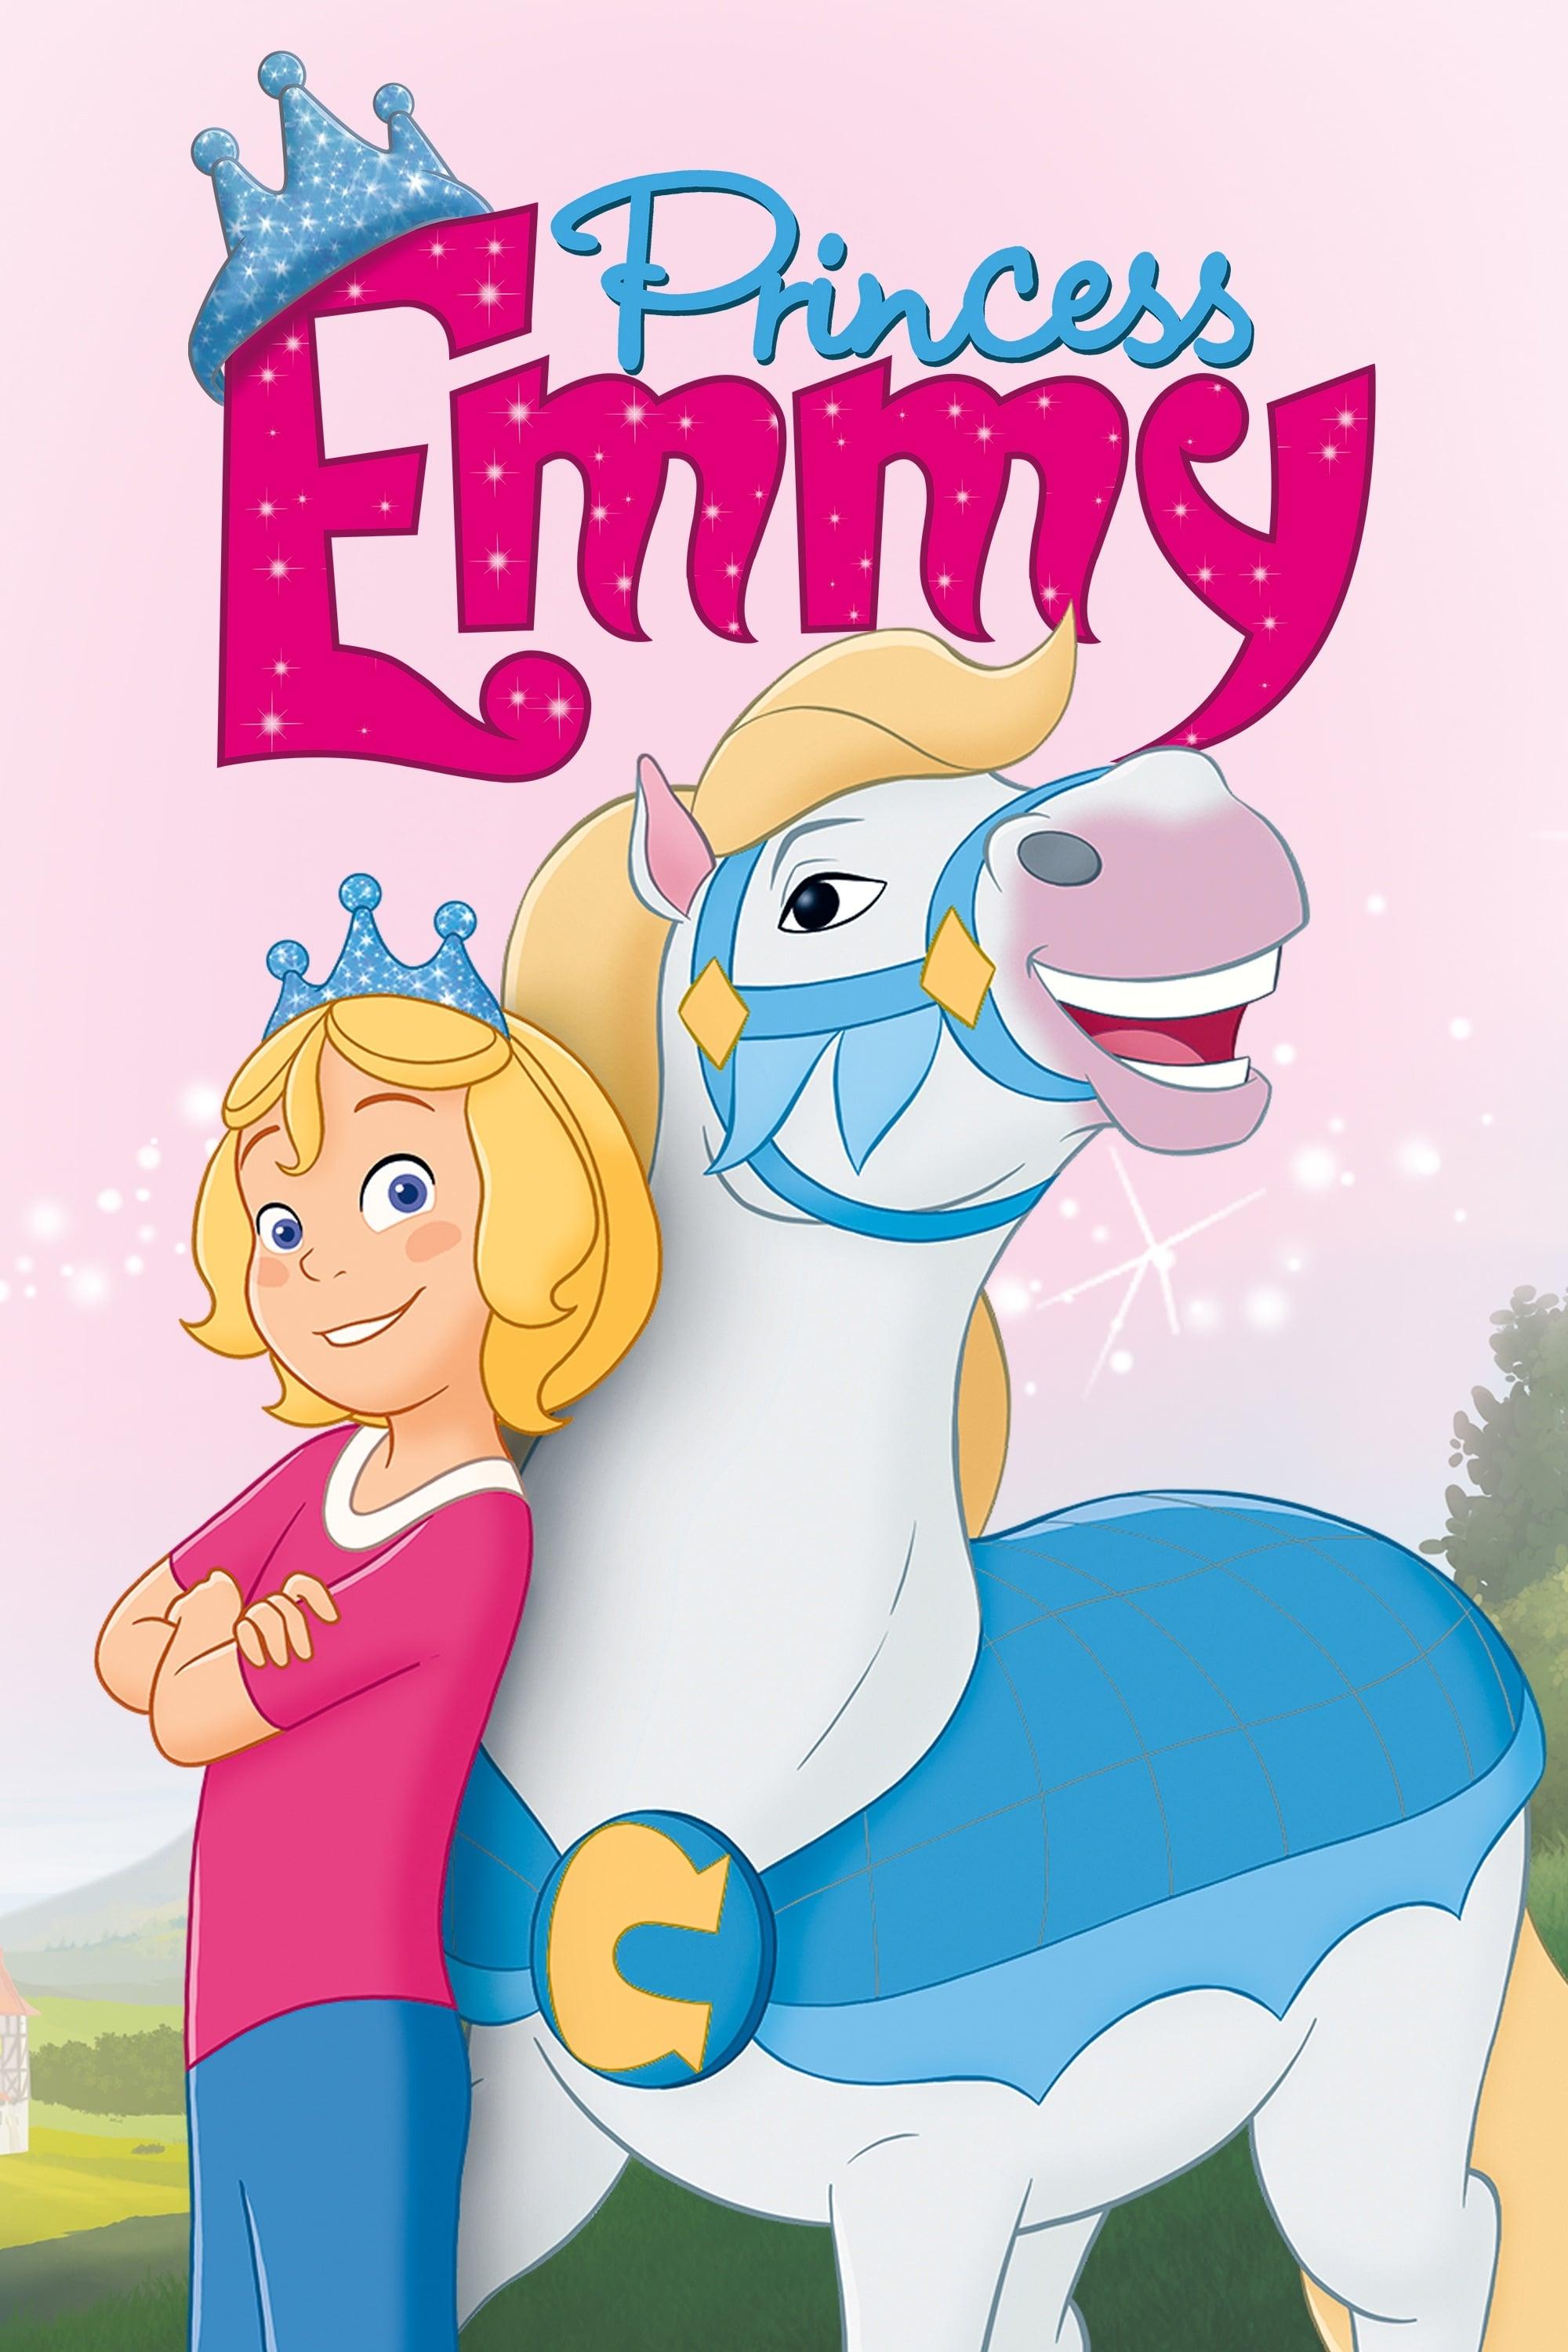 Princess Emmy poster